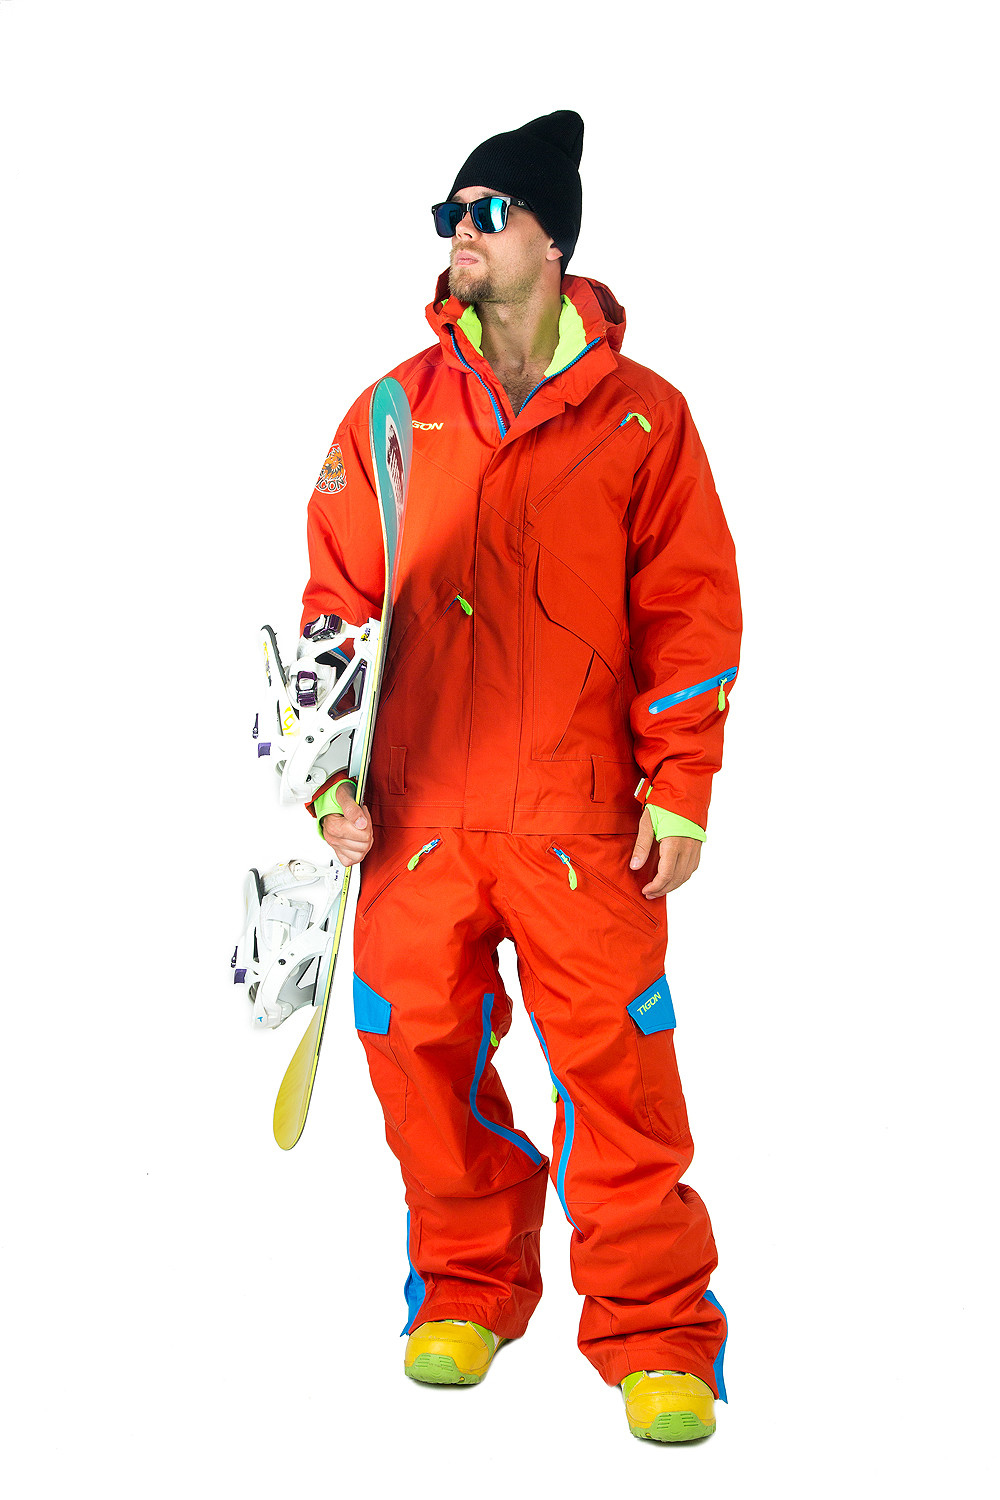 Stylish Ski Wear That Will Make You Stand Out - PRETEND Magazine